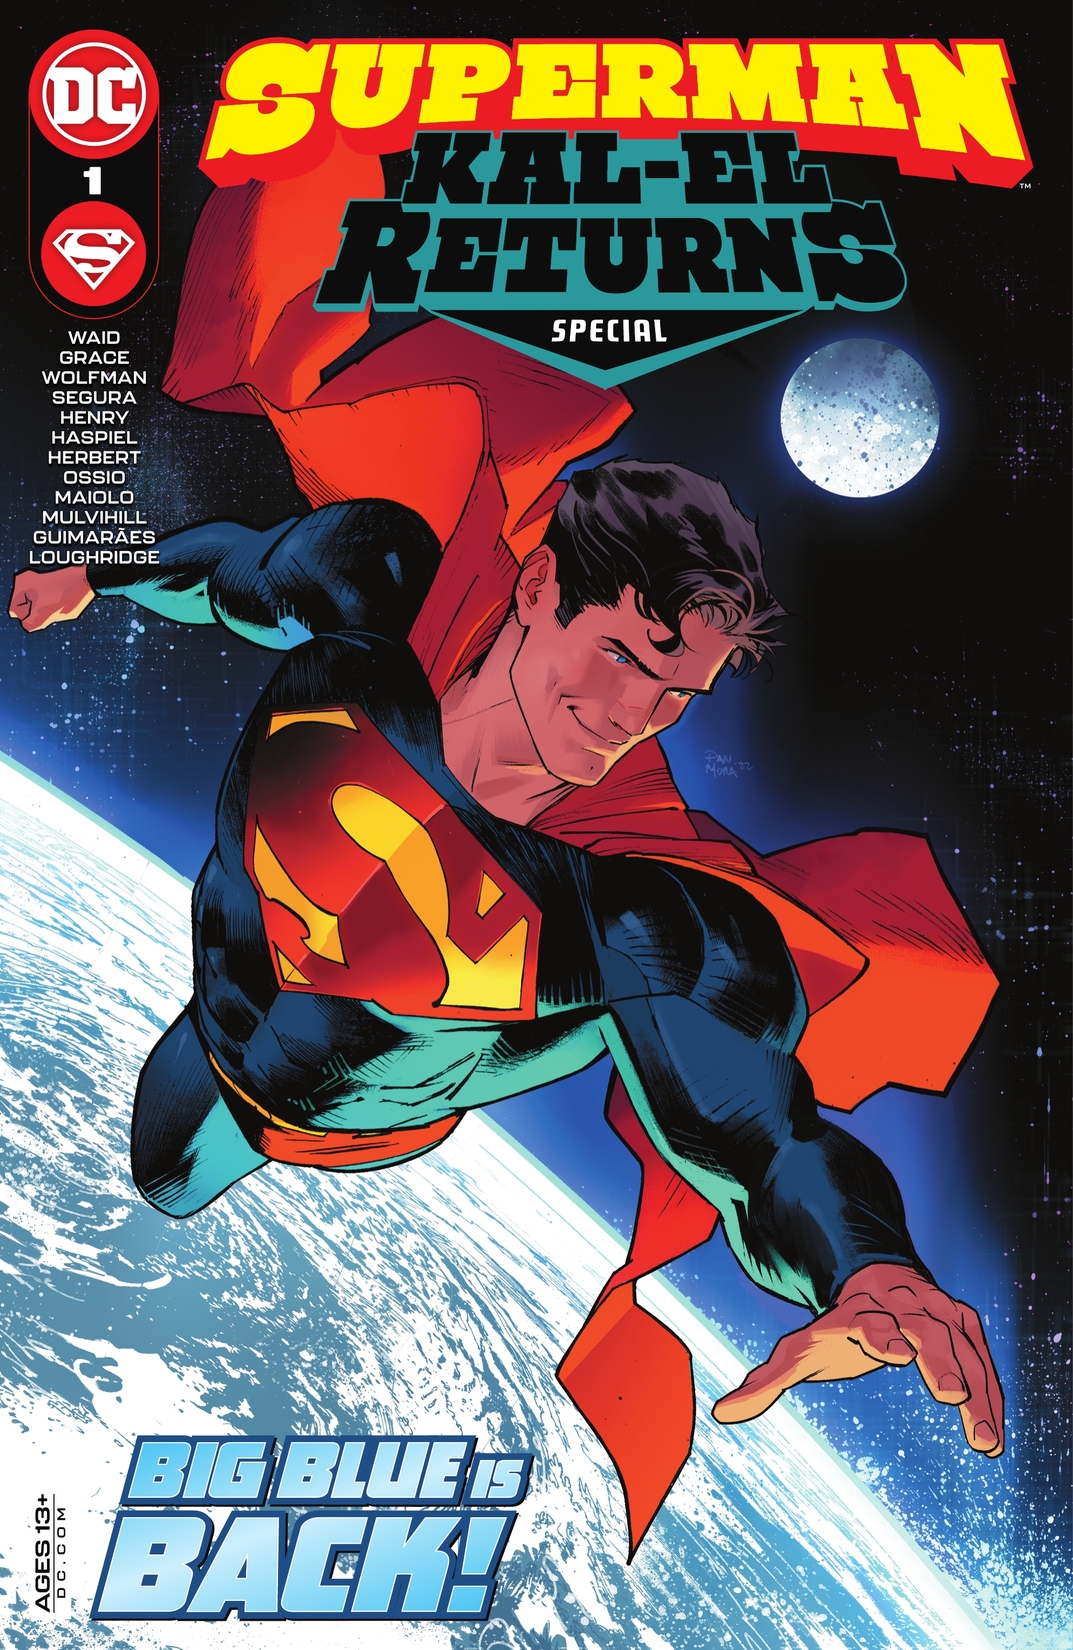 Superman: Kal-El Returns Special #1 preview images